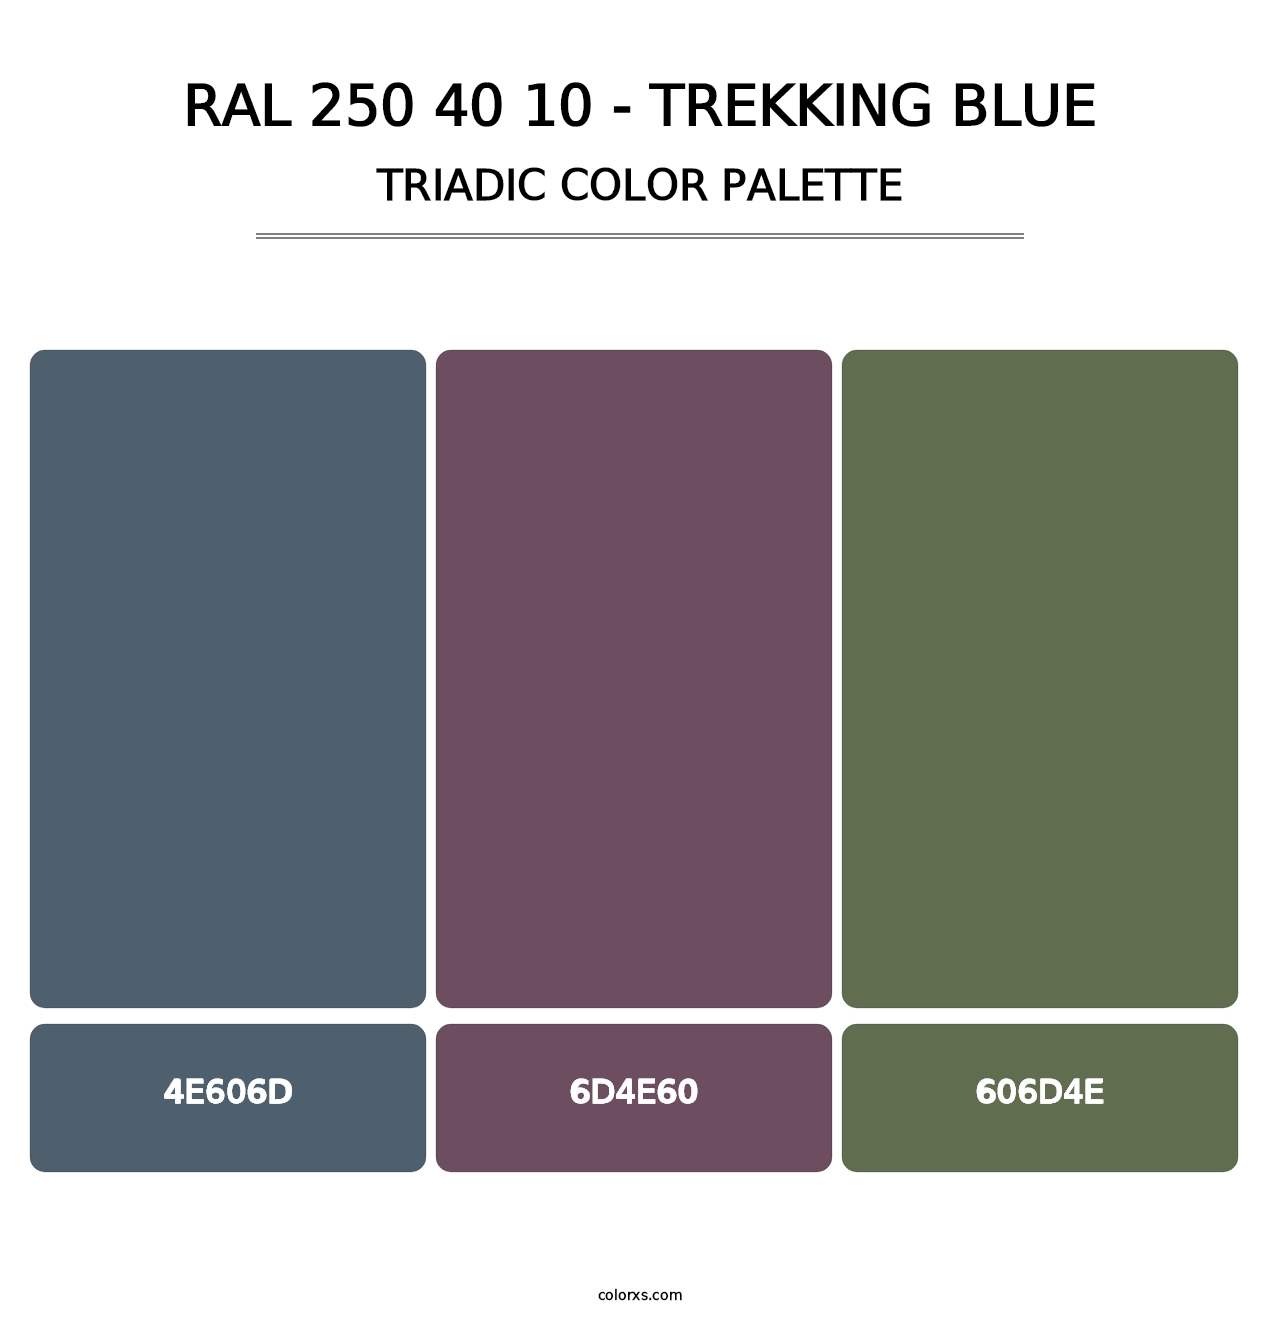 RAL 250 40 10 - Trekking Blue - Triadic Color Palette